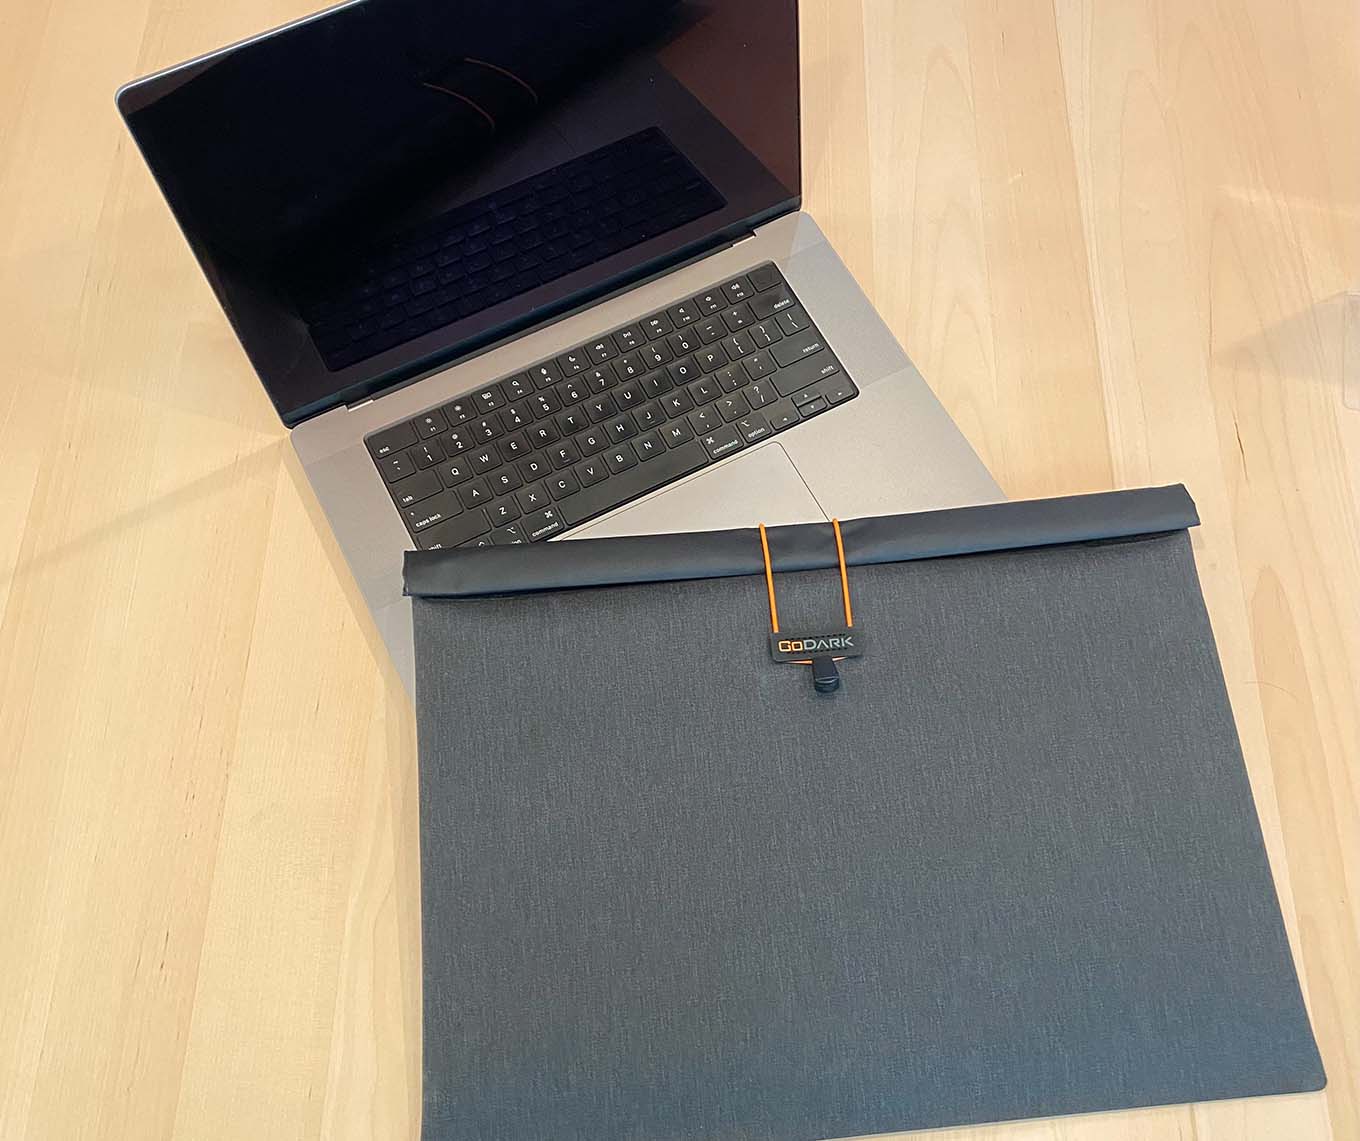 GoDark Faraday Laptop Sleeve with computer